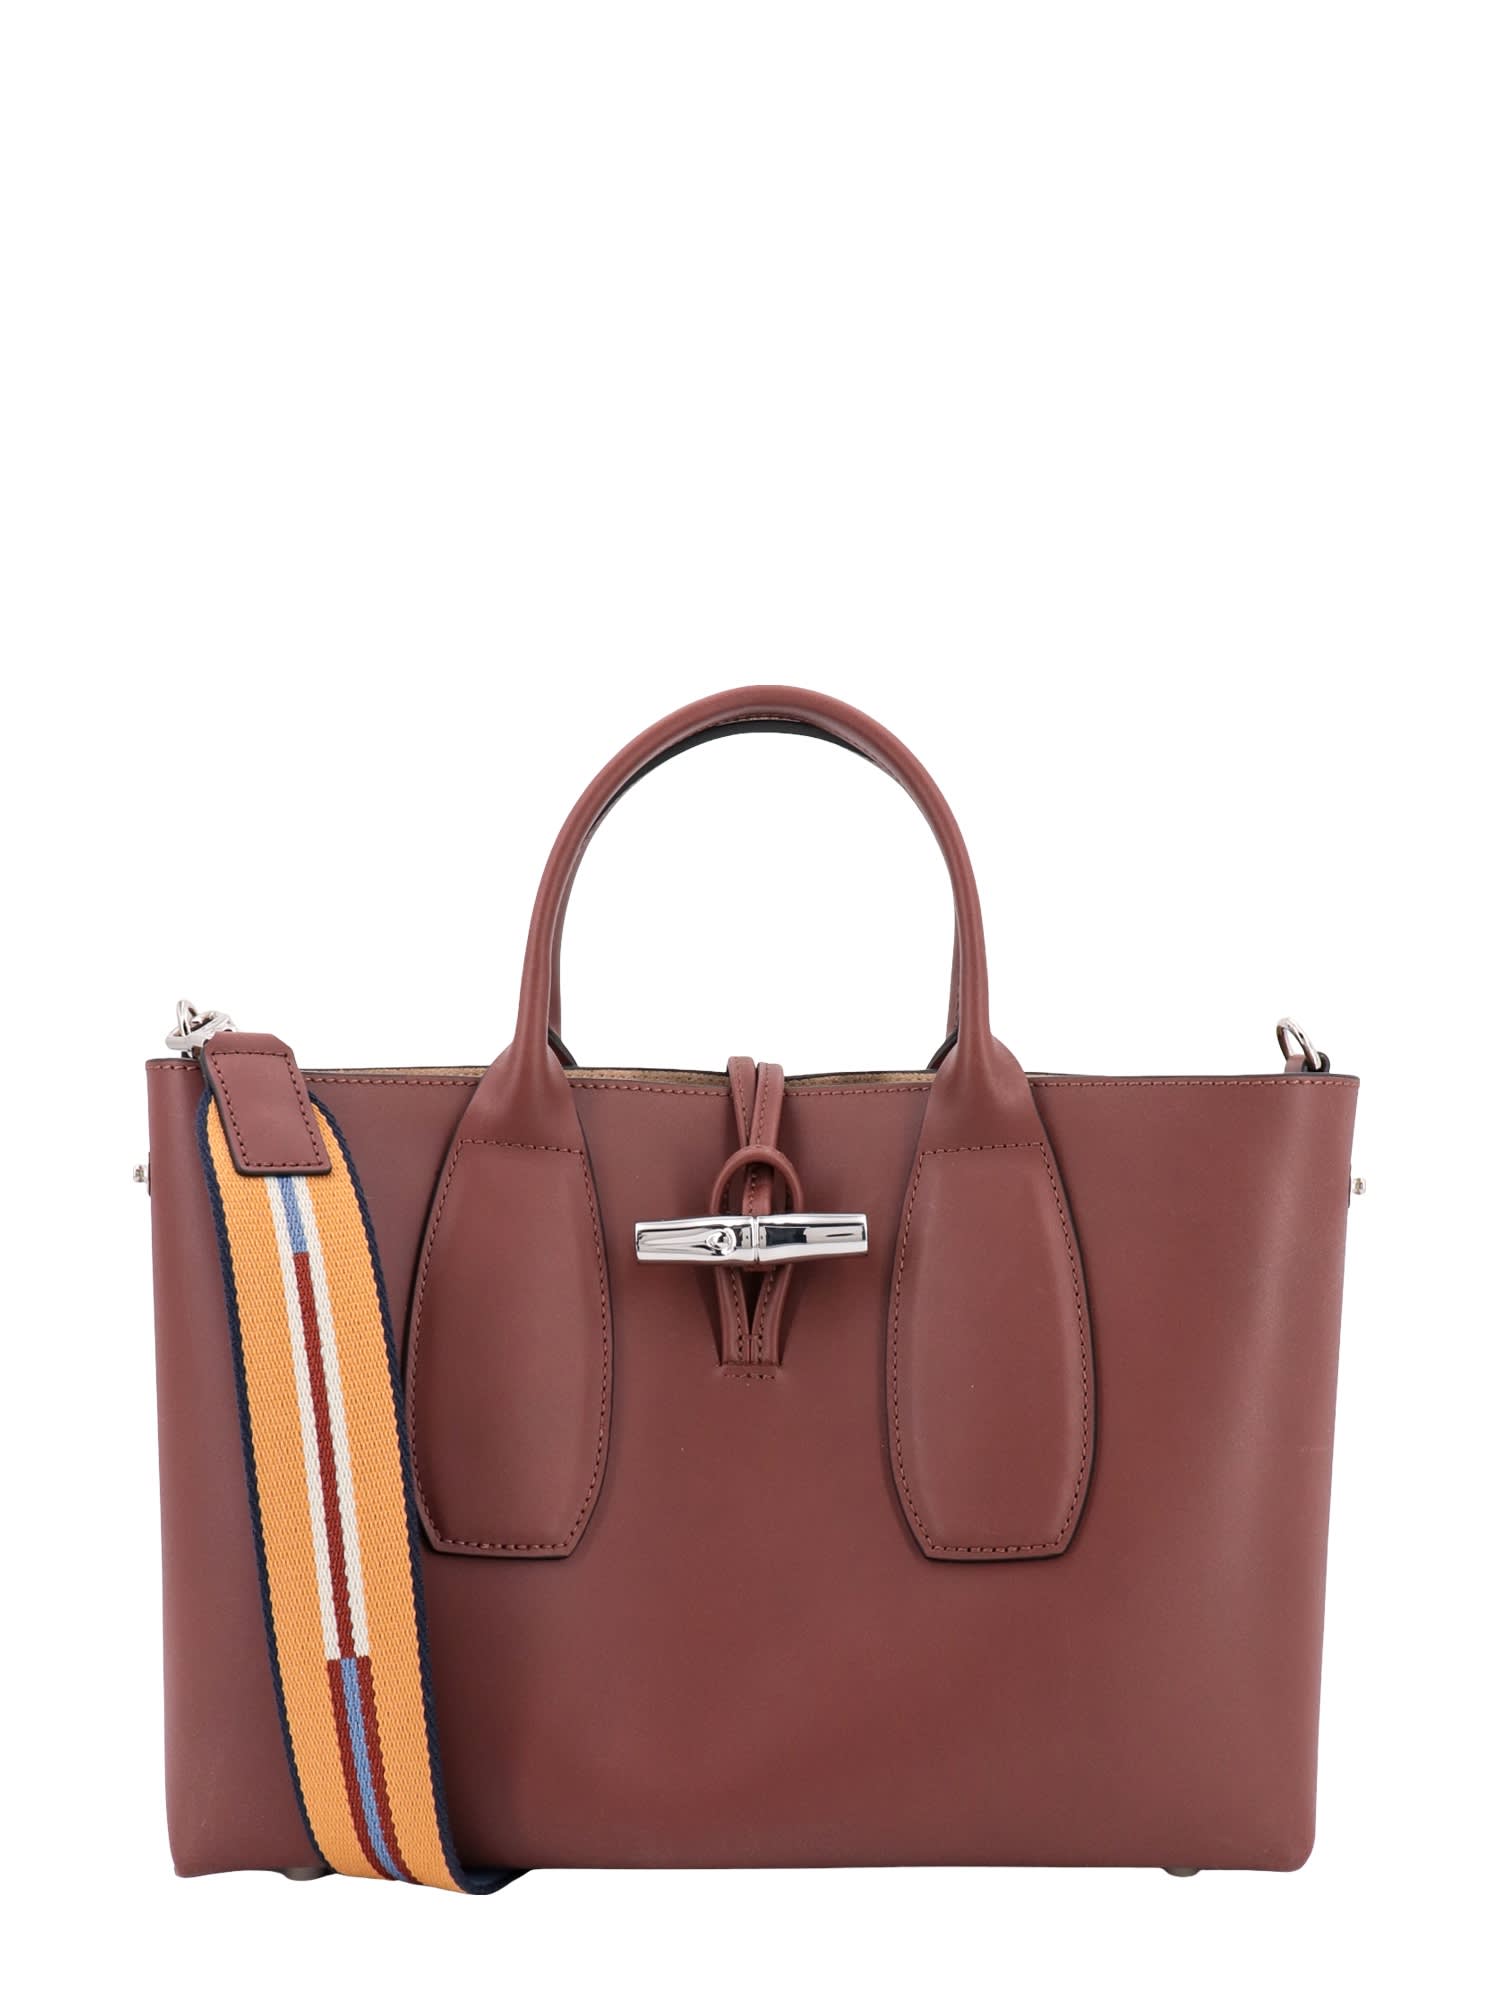 Longchamp Handbag In Brown